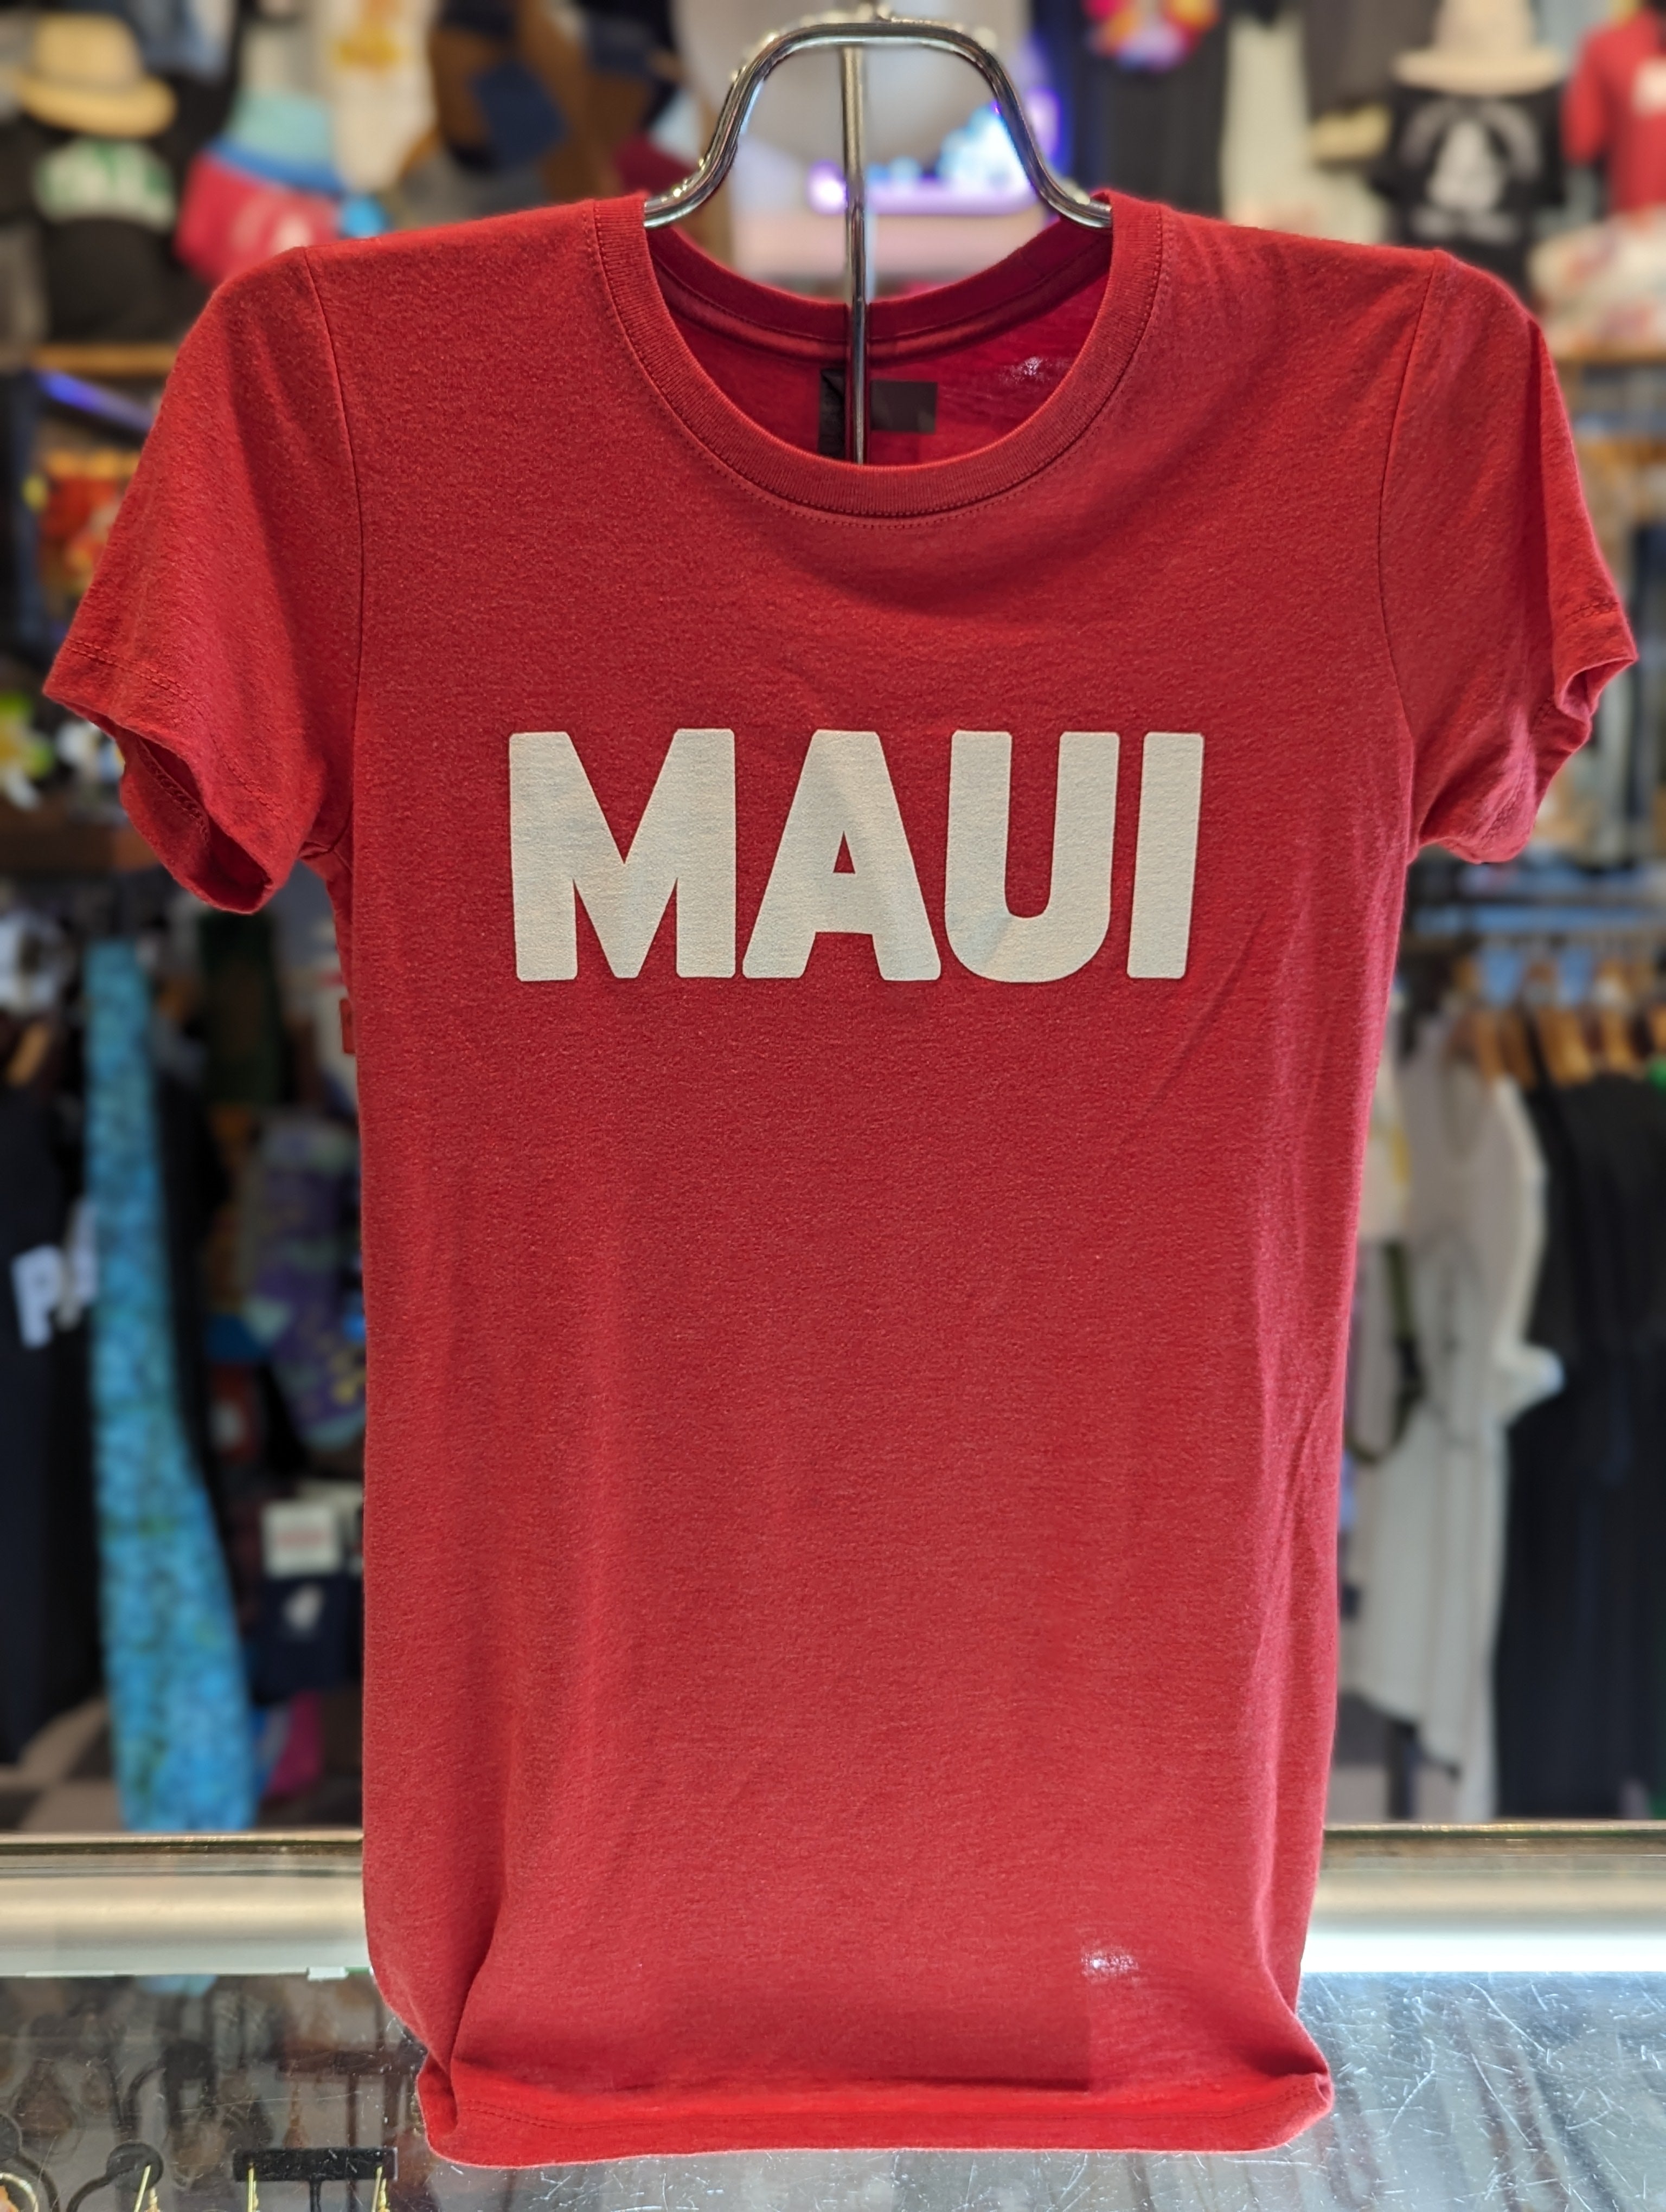 Women's Red "Maui" Tee